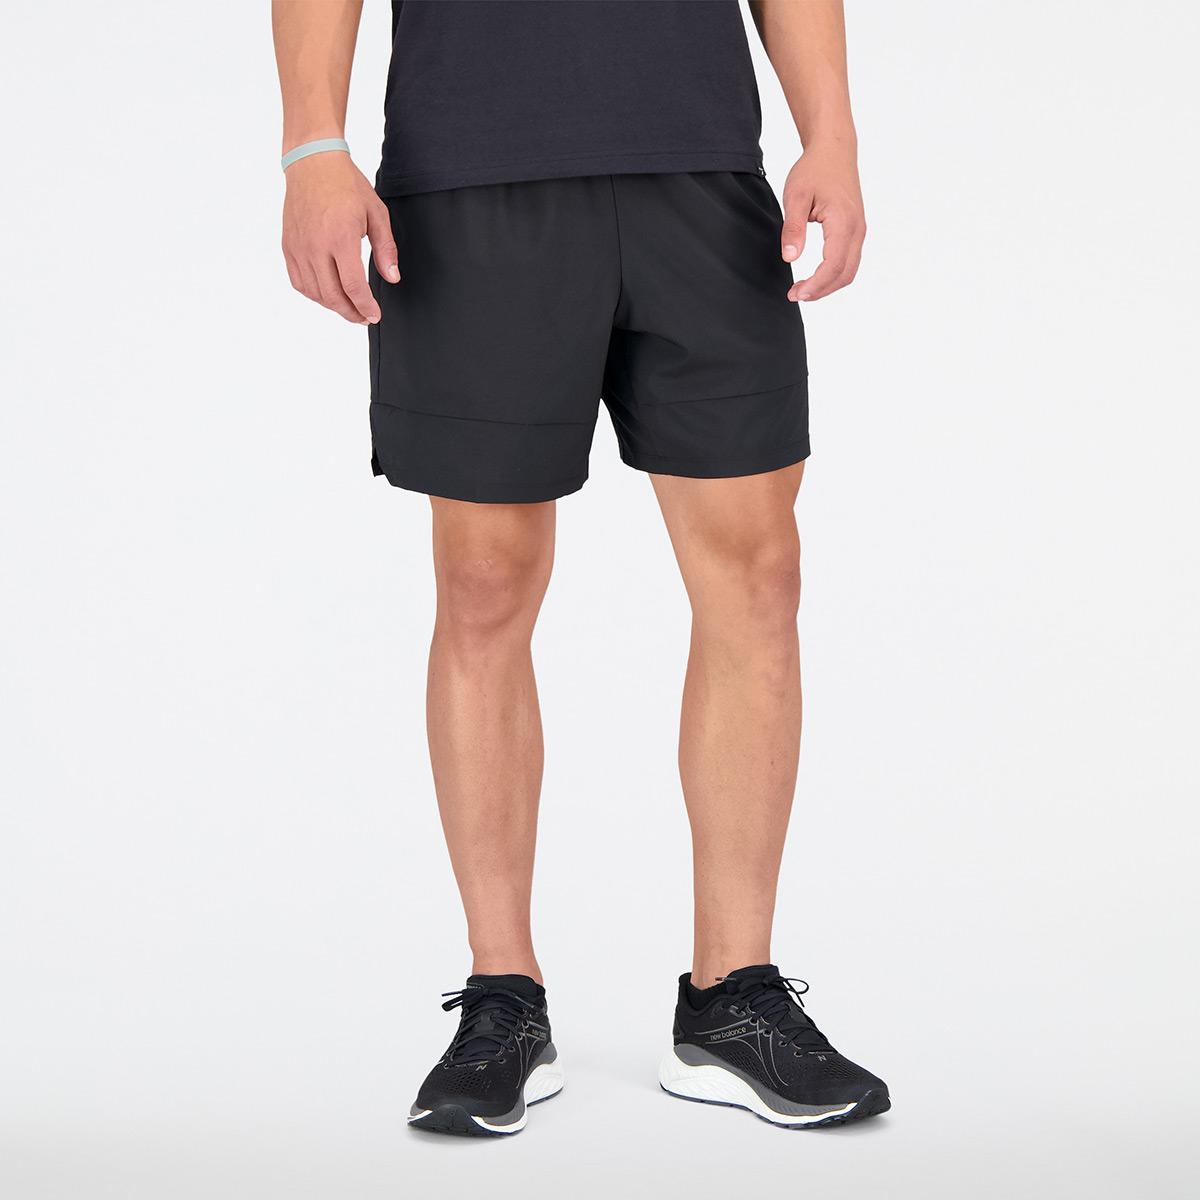 New Balance Tenacity Solid Woven 7 Inch Shorts - Black